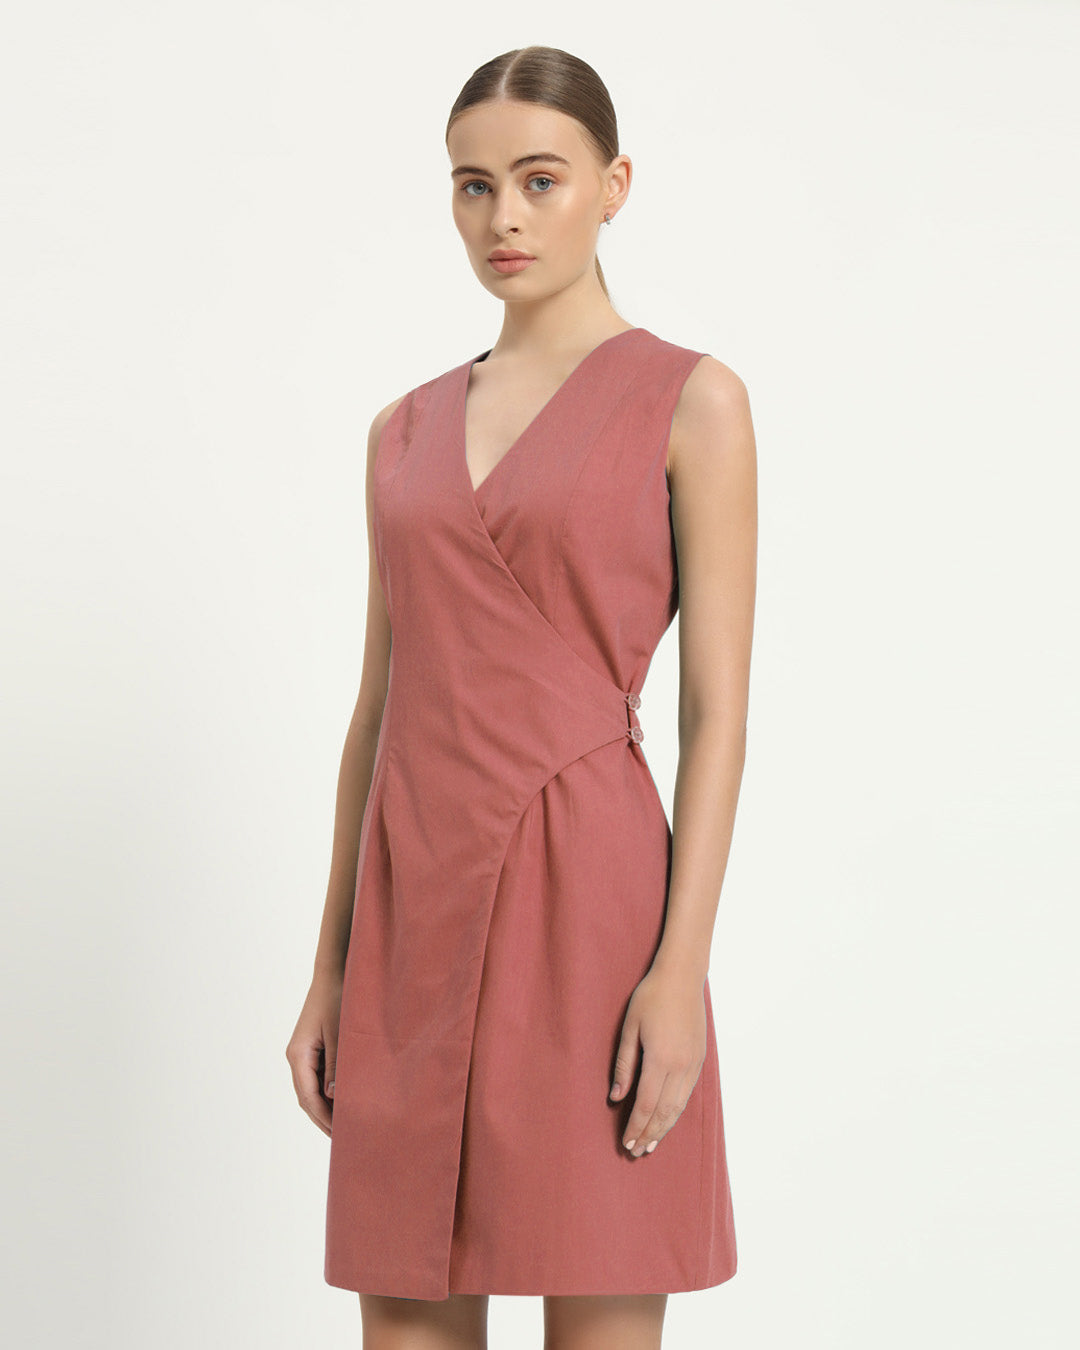 The Augsberg Ivory Pink Cotton Dress